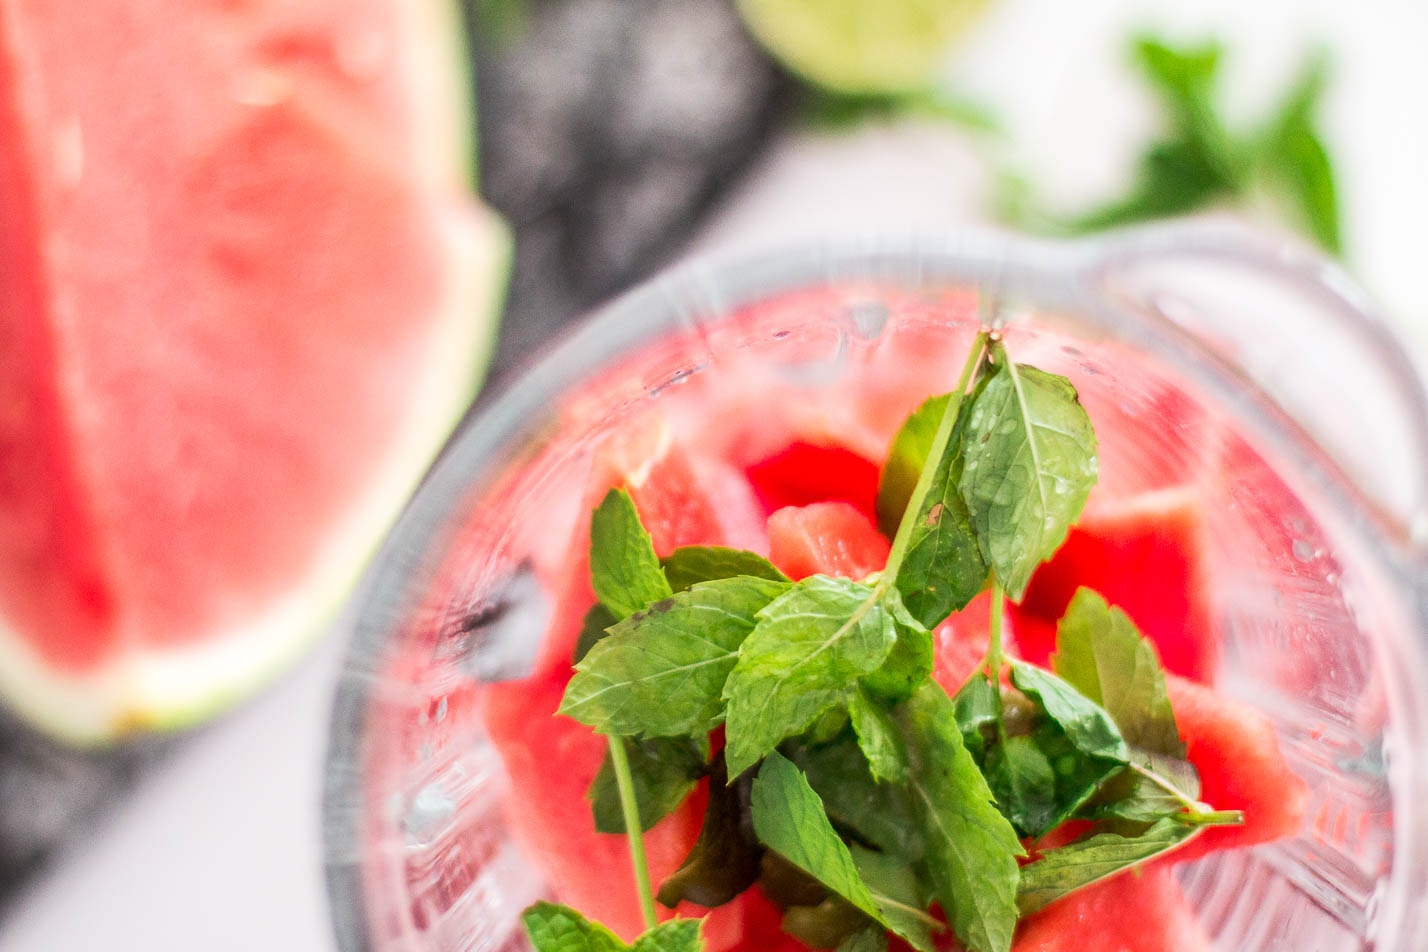 #tddbucketlist: Homemade Watermelon Juice Recipe | Love Daily Dose